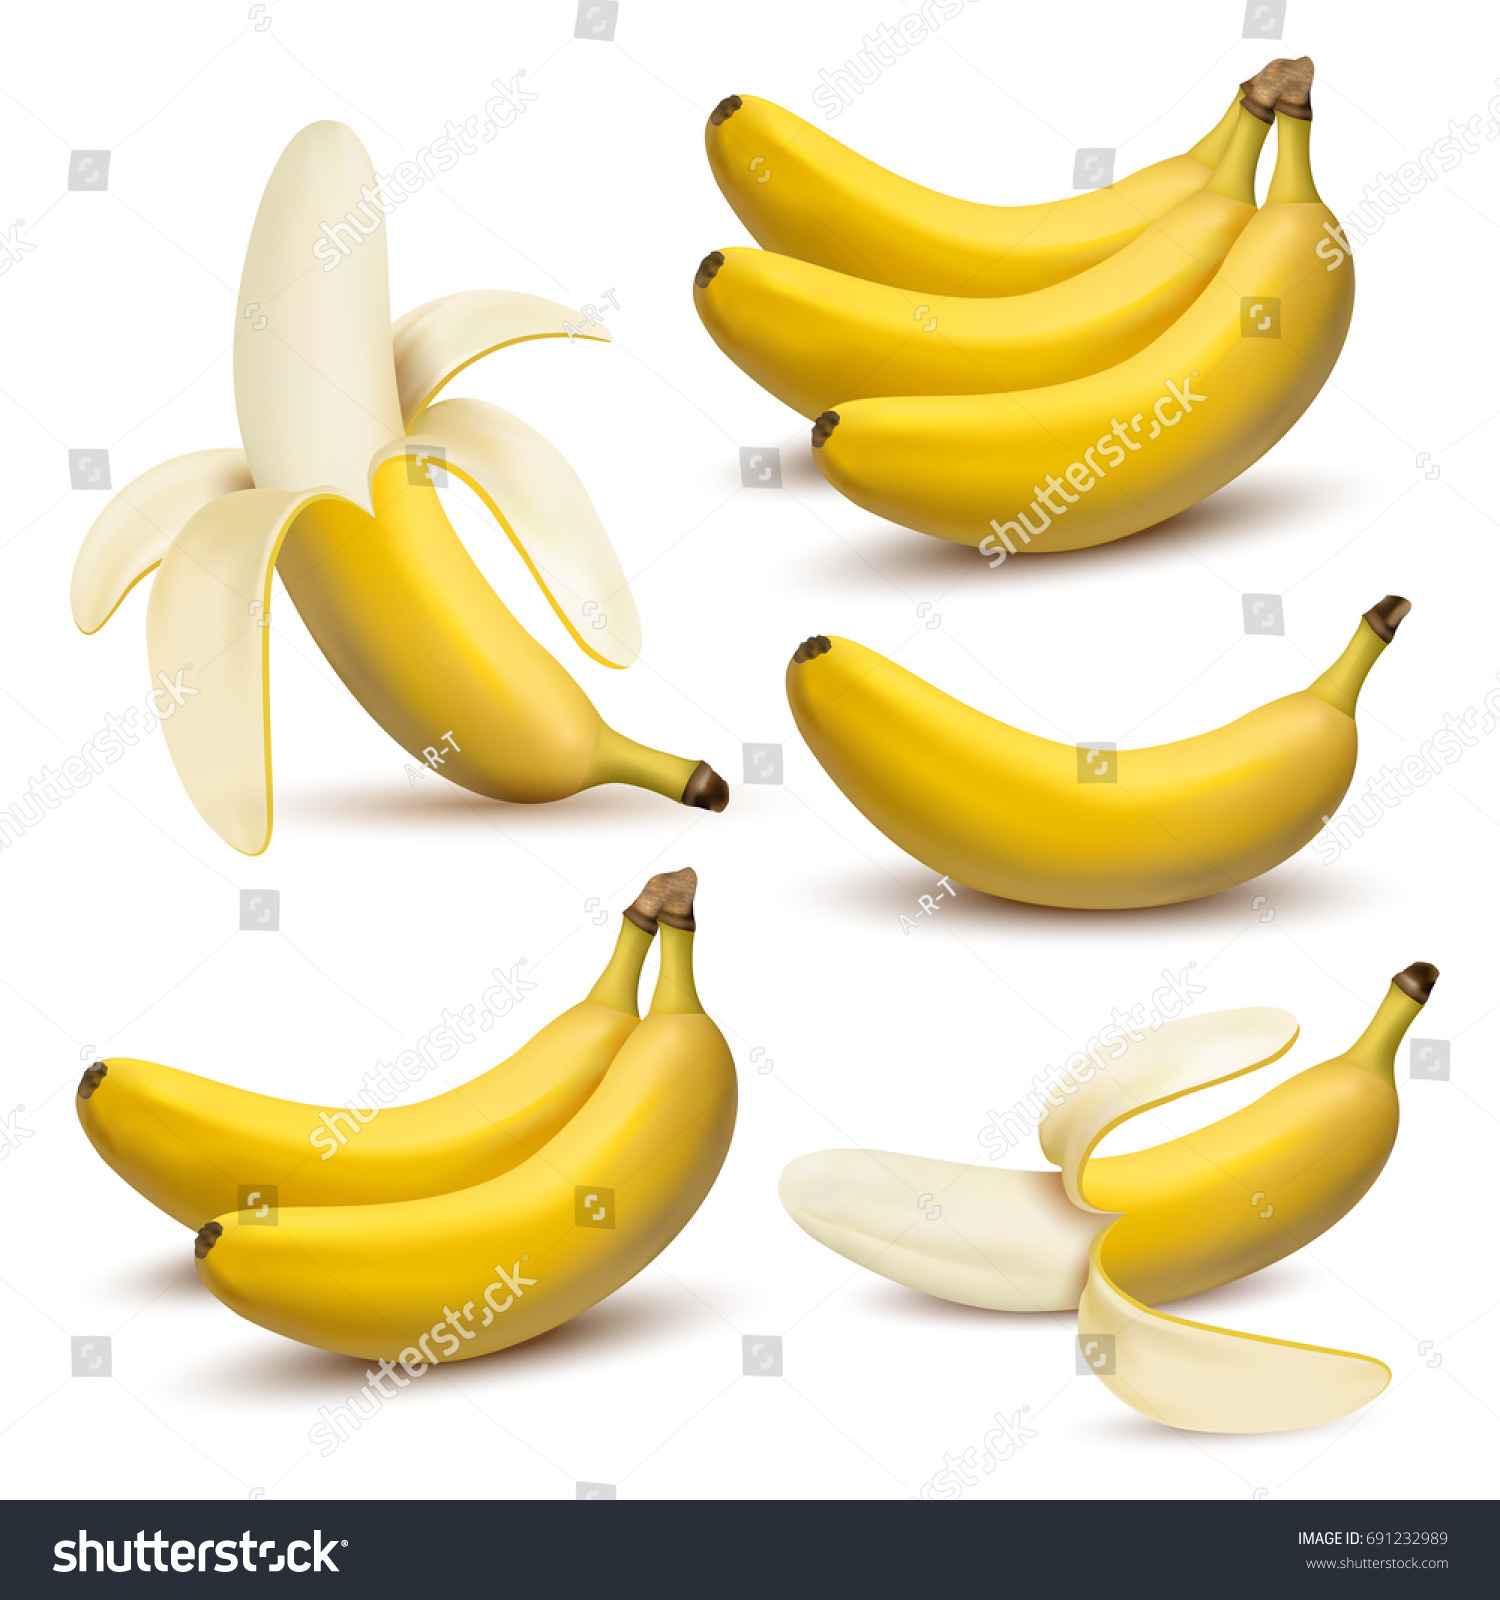 Set of 3d vector realistic illustration bananas. Banana,half peeled banana,bunch of bananas isolated on white background, banana icon #691232989